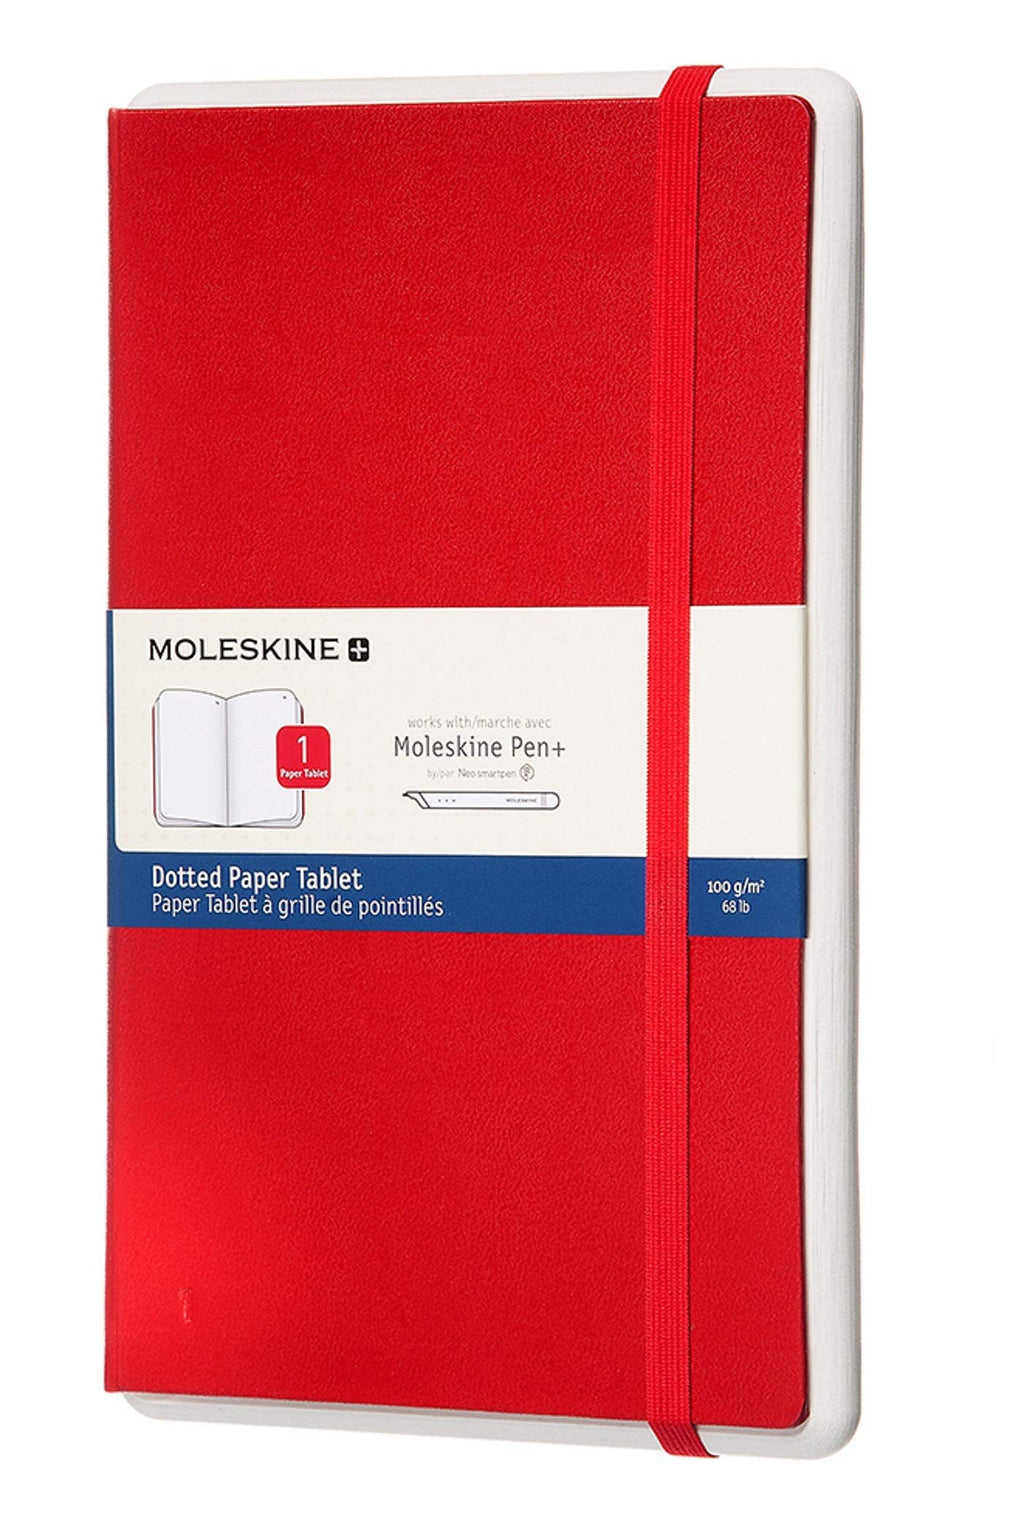 [Australia - AusPower] - Moleskine Paper Tablet Hard Cover Smart Notebook, Dotted, Large (5" x 8.25") Scarlet Red - Compatible w/ Moleskine Pen+ Ellipse (Sold Separately) & App, Digitize, Organize Notes 